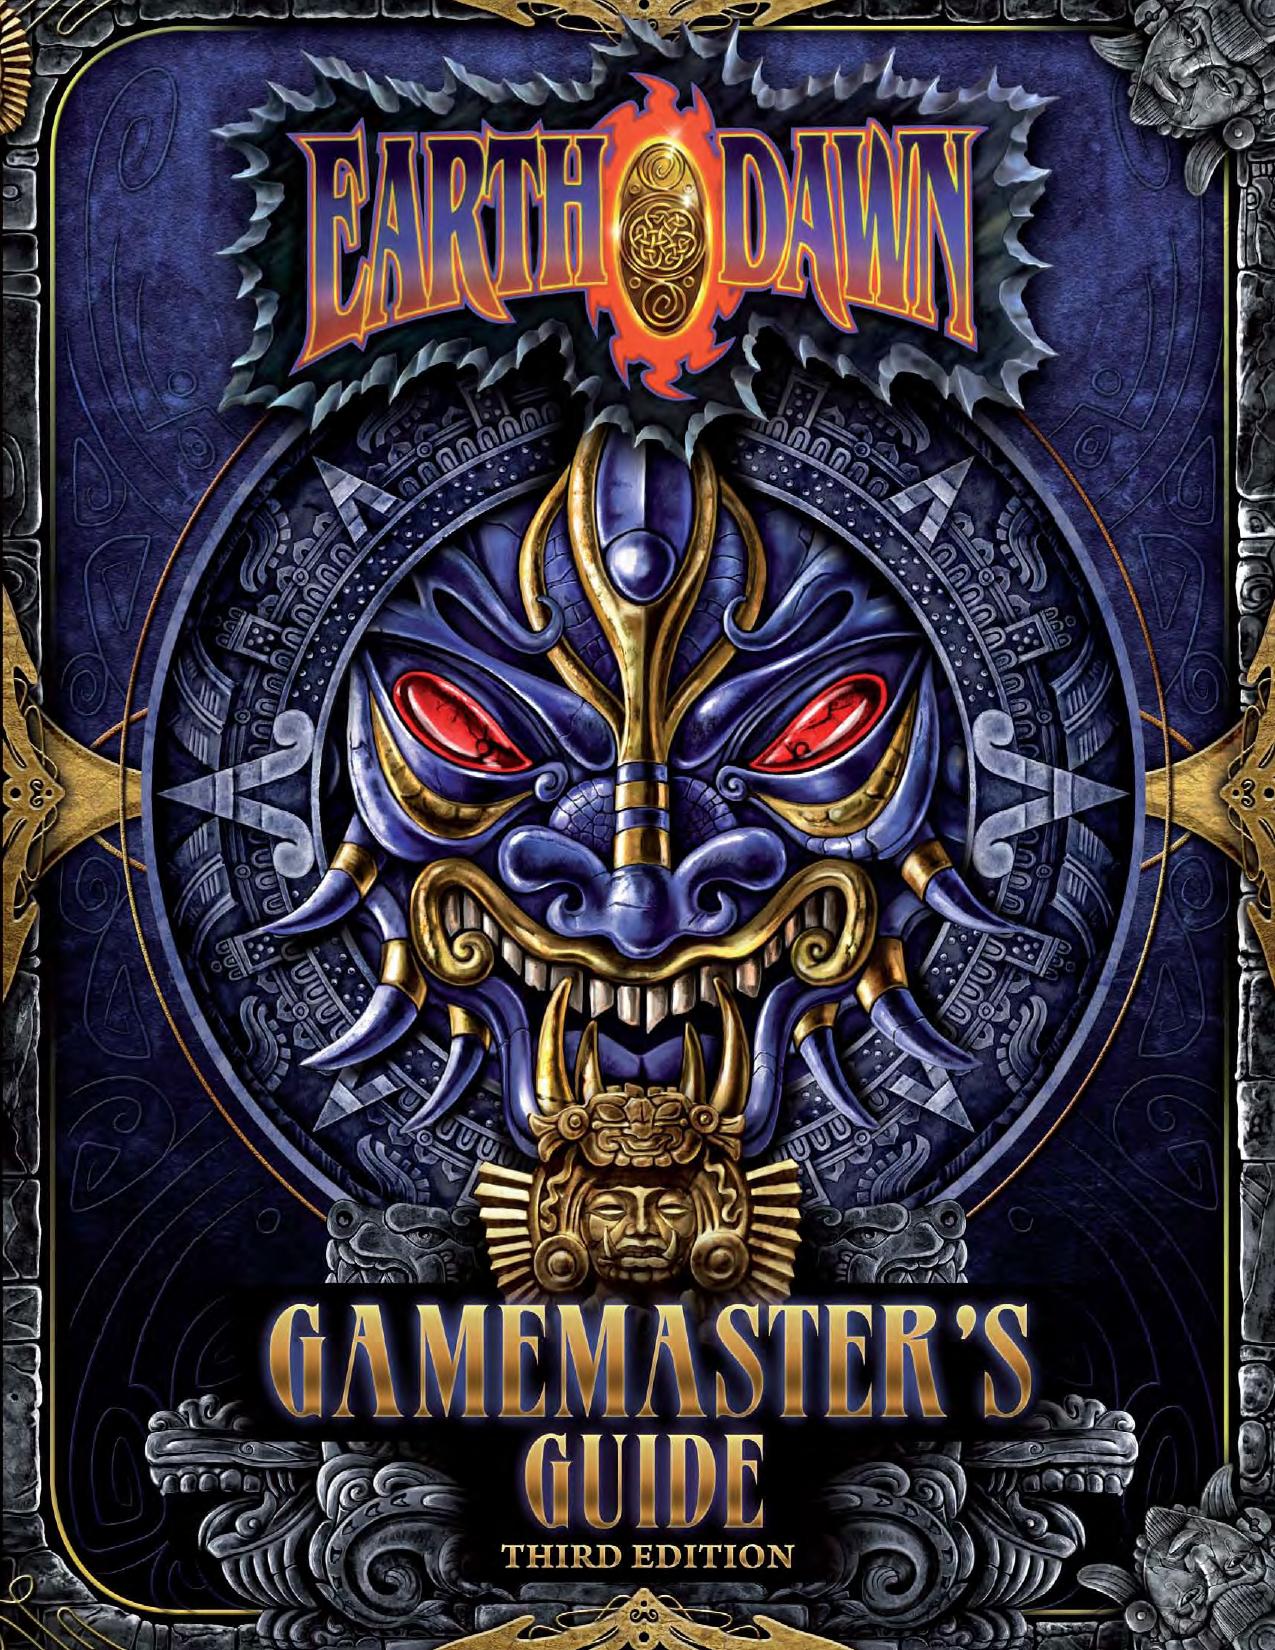 Earthdawn Third Edition Gamemaster's Guide